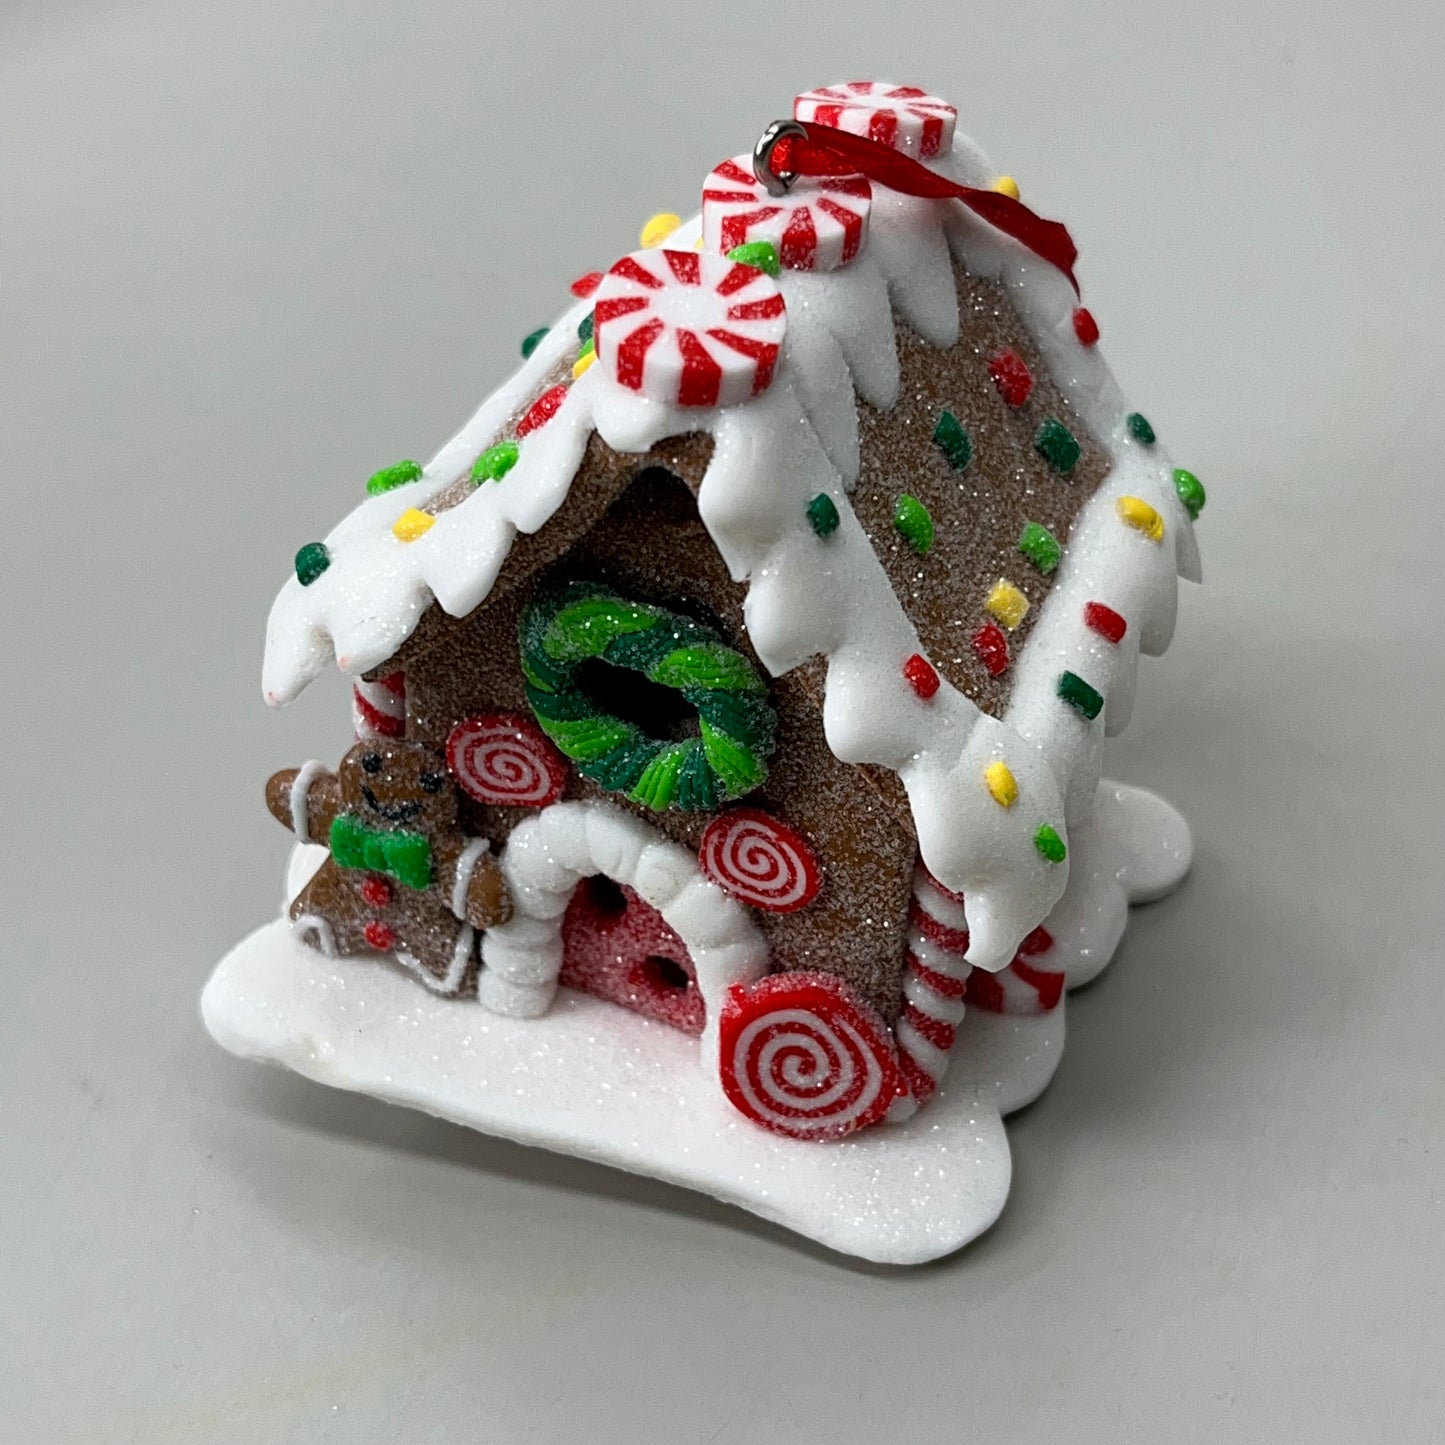 ZA@ RAZ IMPORTS 12-PK Christmas Holiday 3.25" LED Lighted Gingerbread House Ornament 3815534 (New)